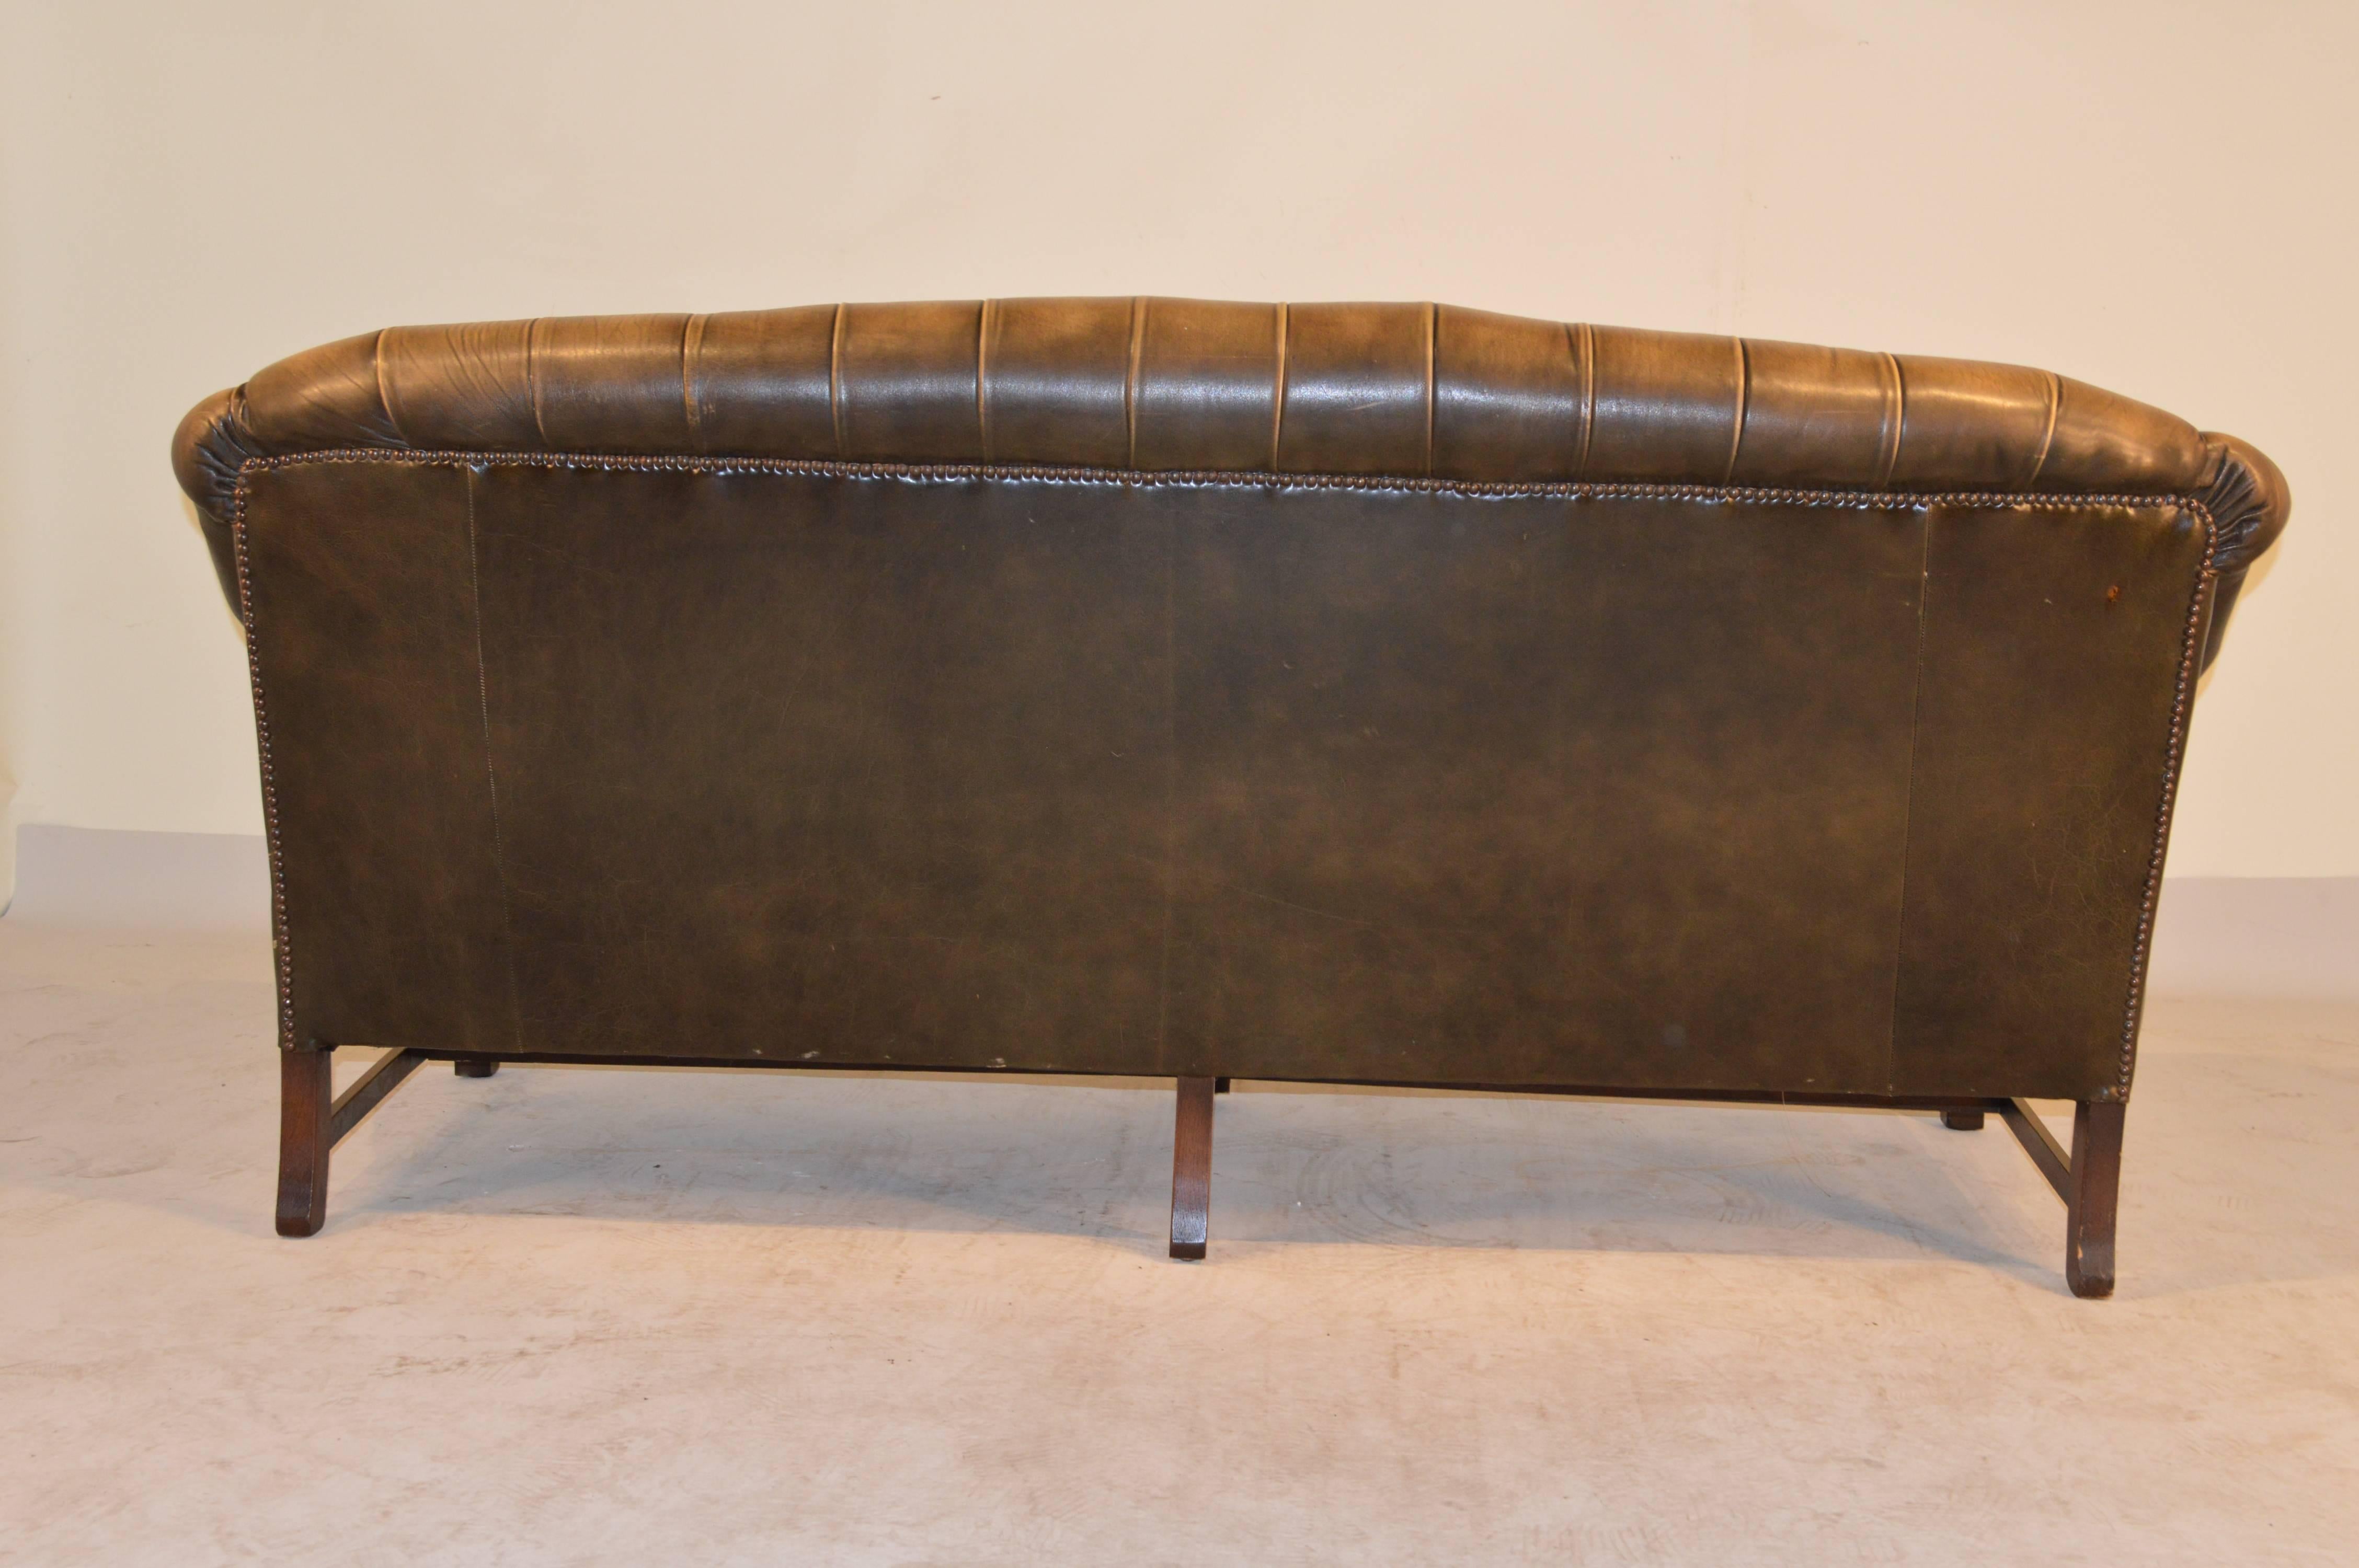 20th Century English Leather Chesterfield Sofa, circa 1950